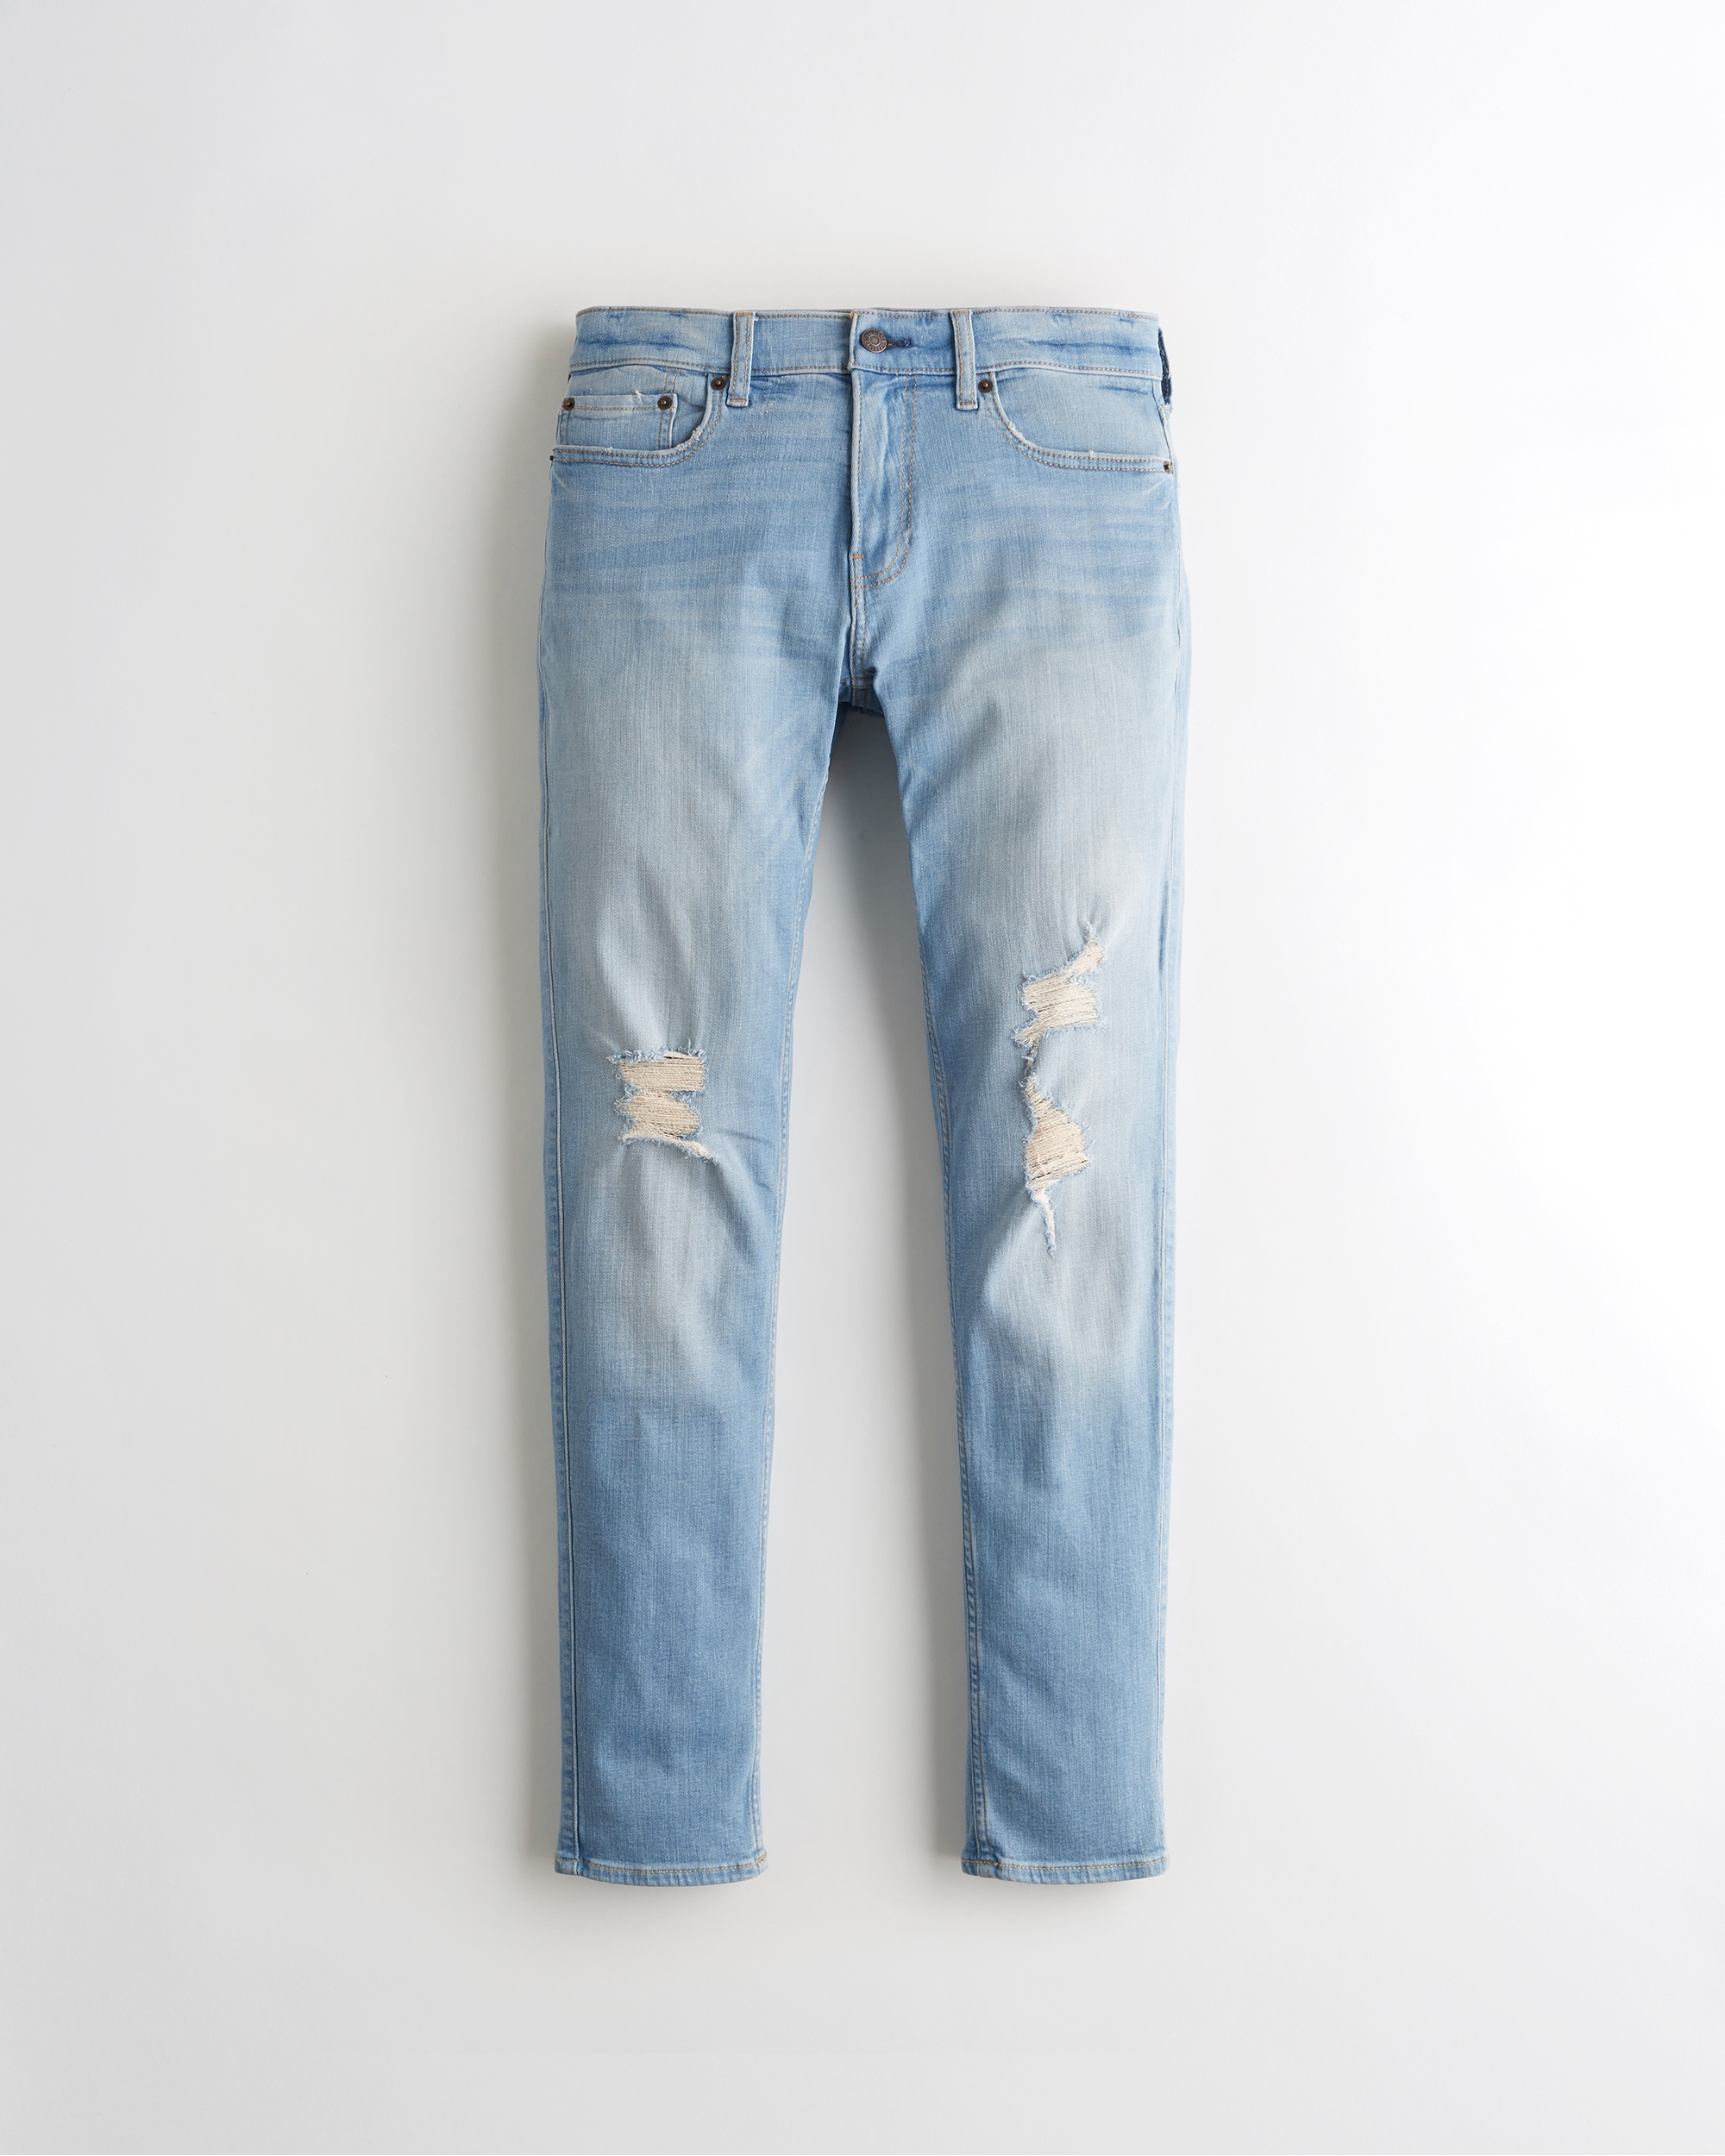 Jeans \u0026 Denim for Guys | Hollister Co.